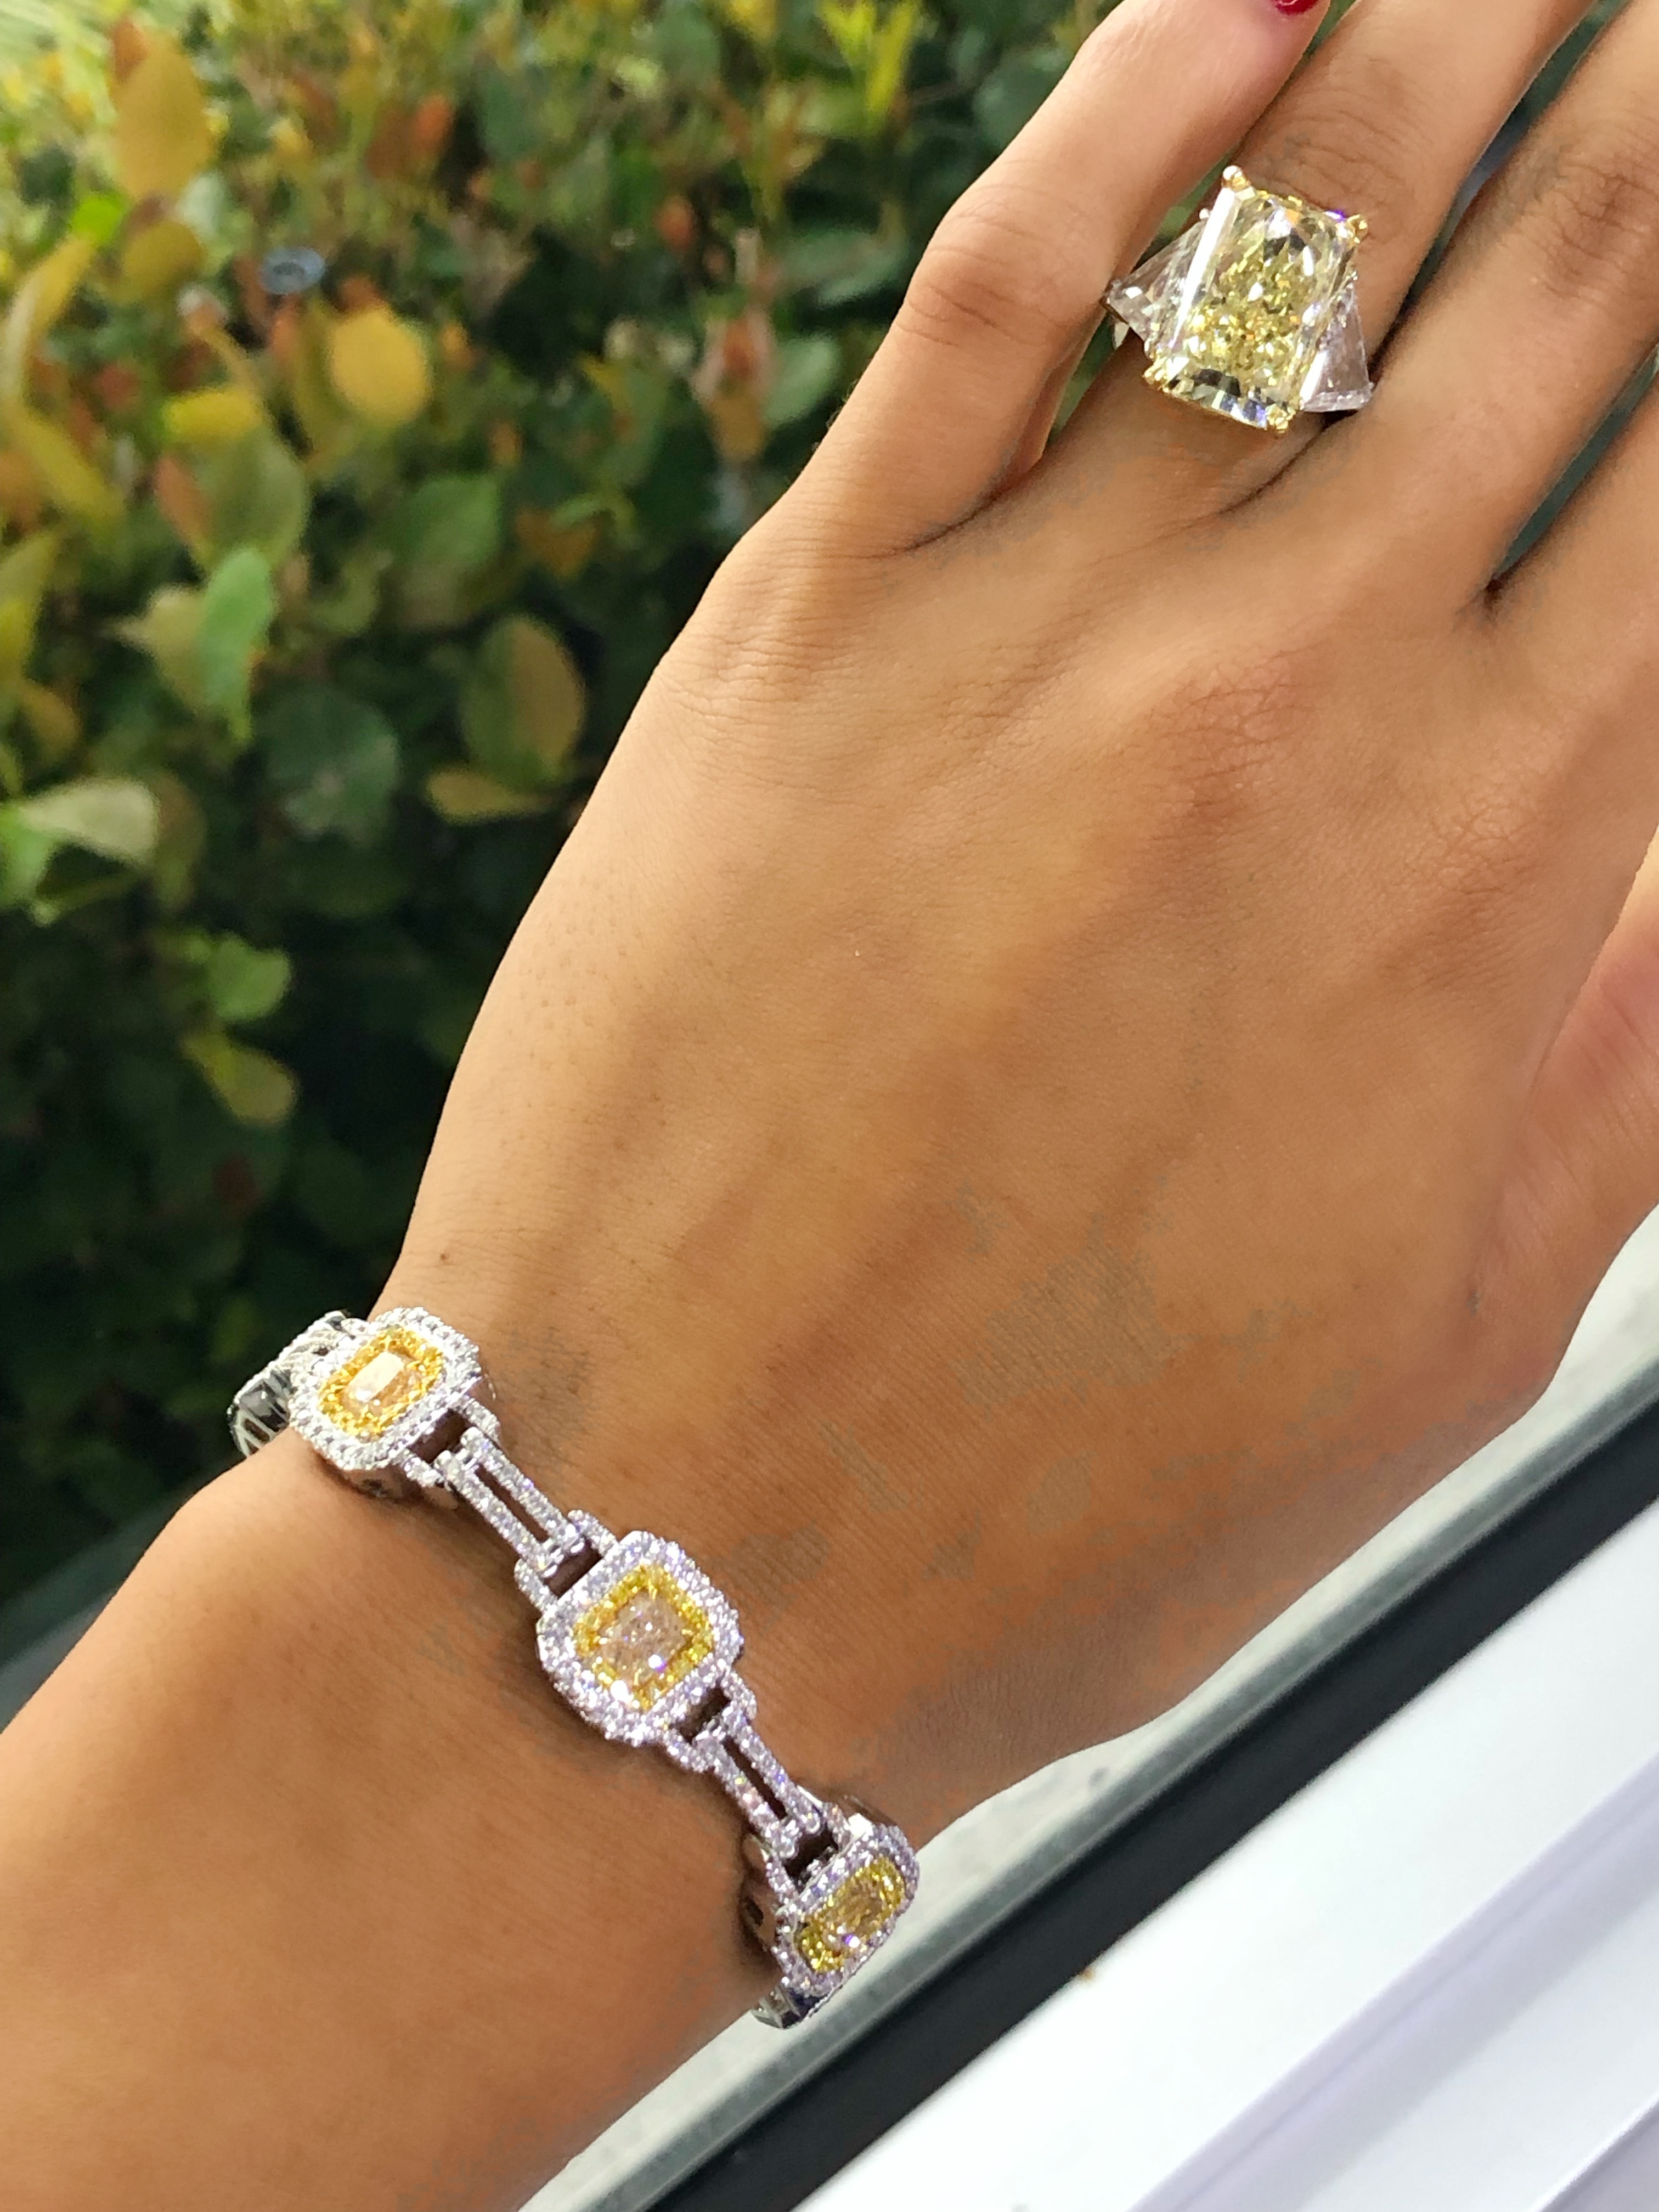 Lady gaga yellow diamond bracelet and ring oscars